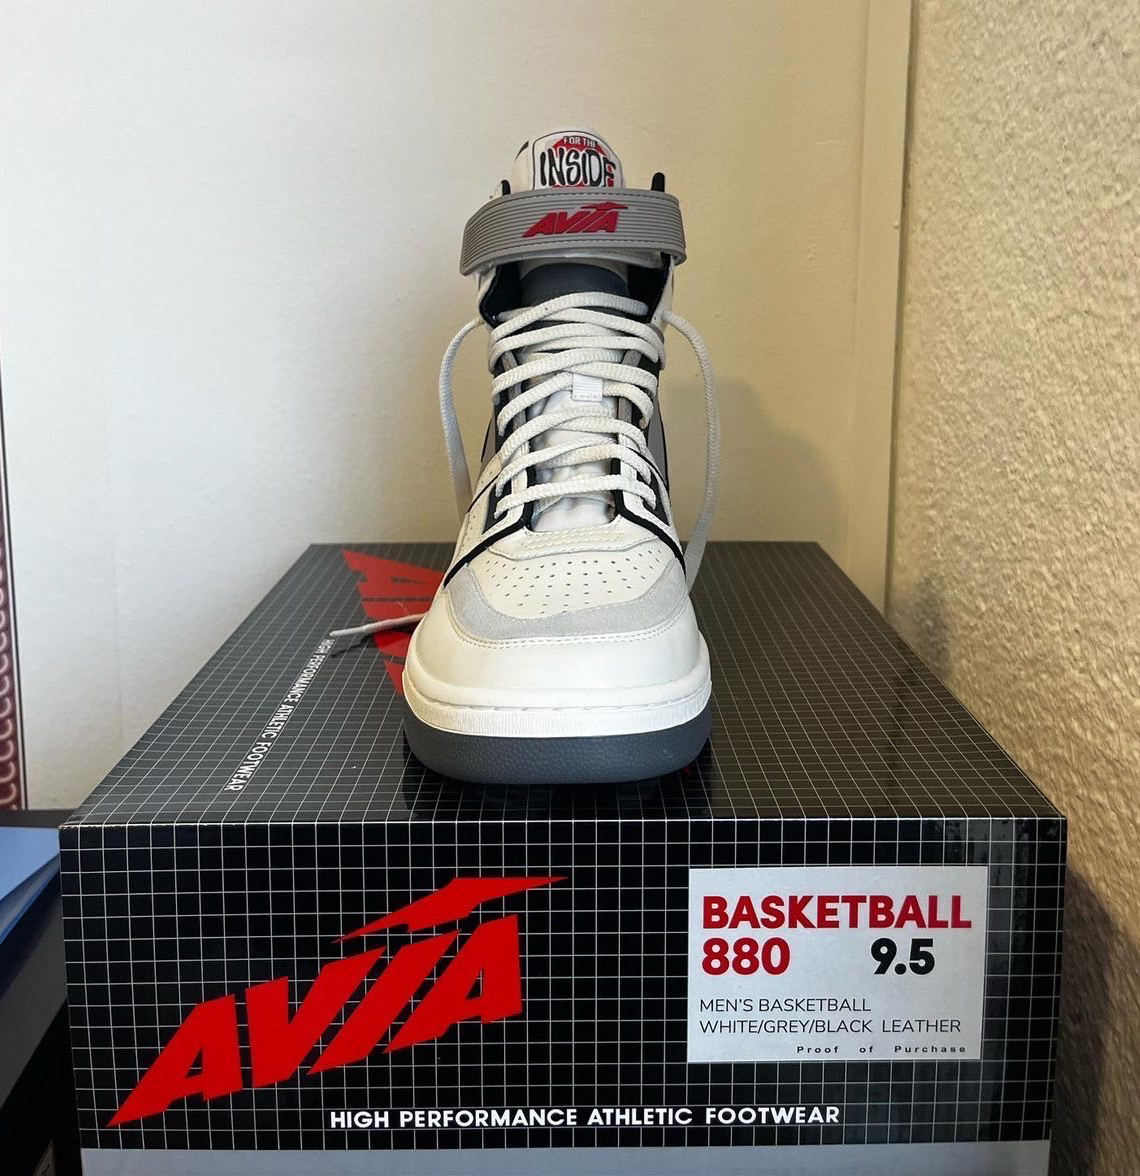 aviva 880 retro basketball shoes 5